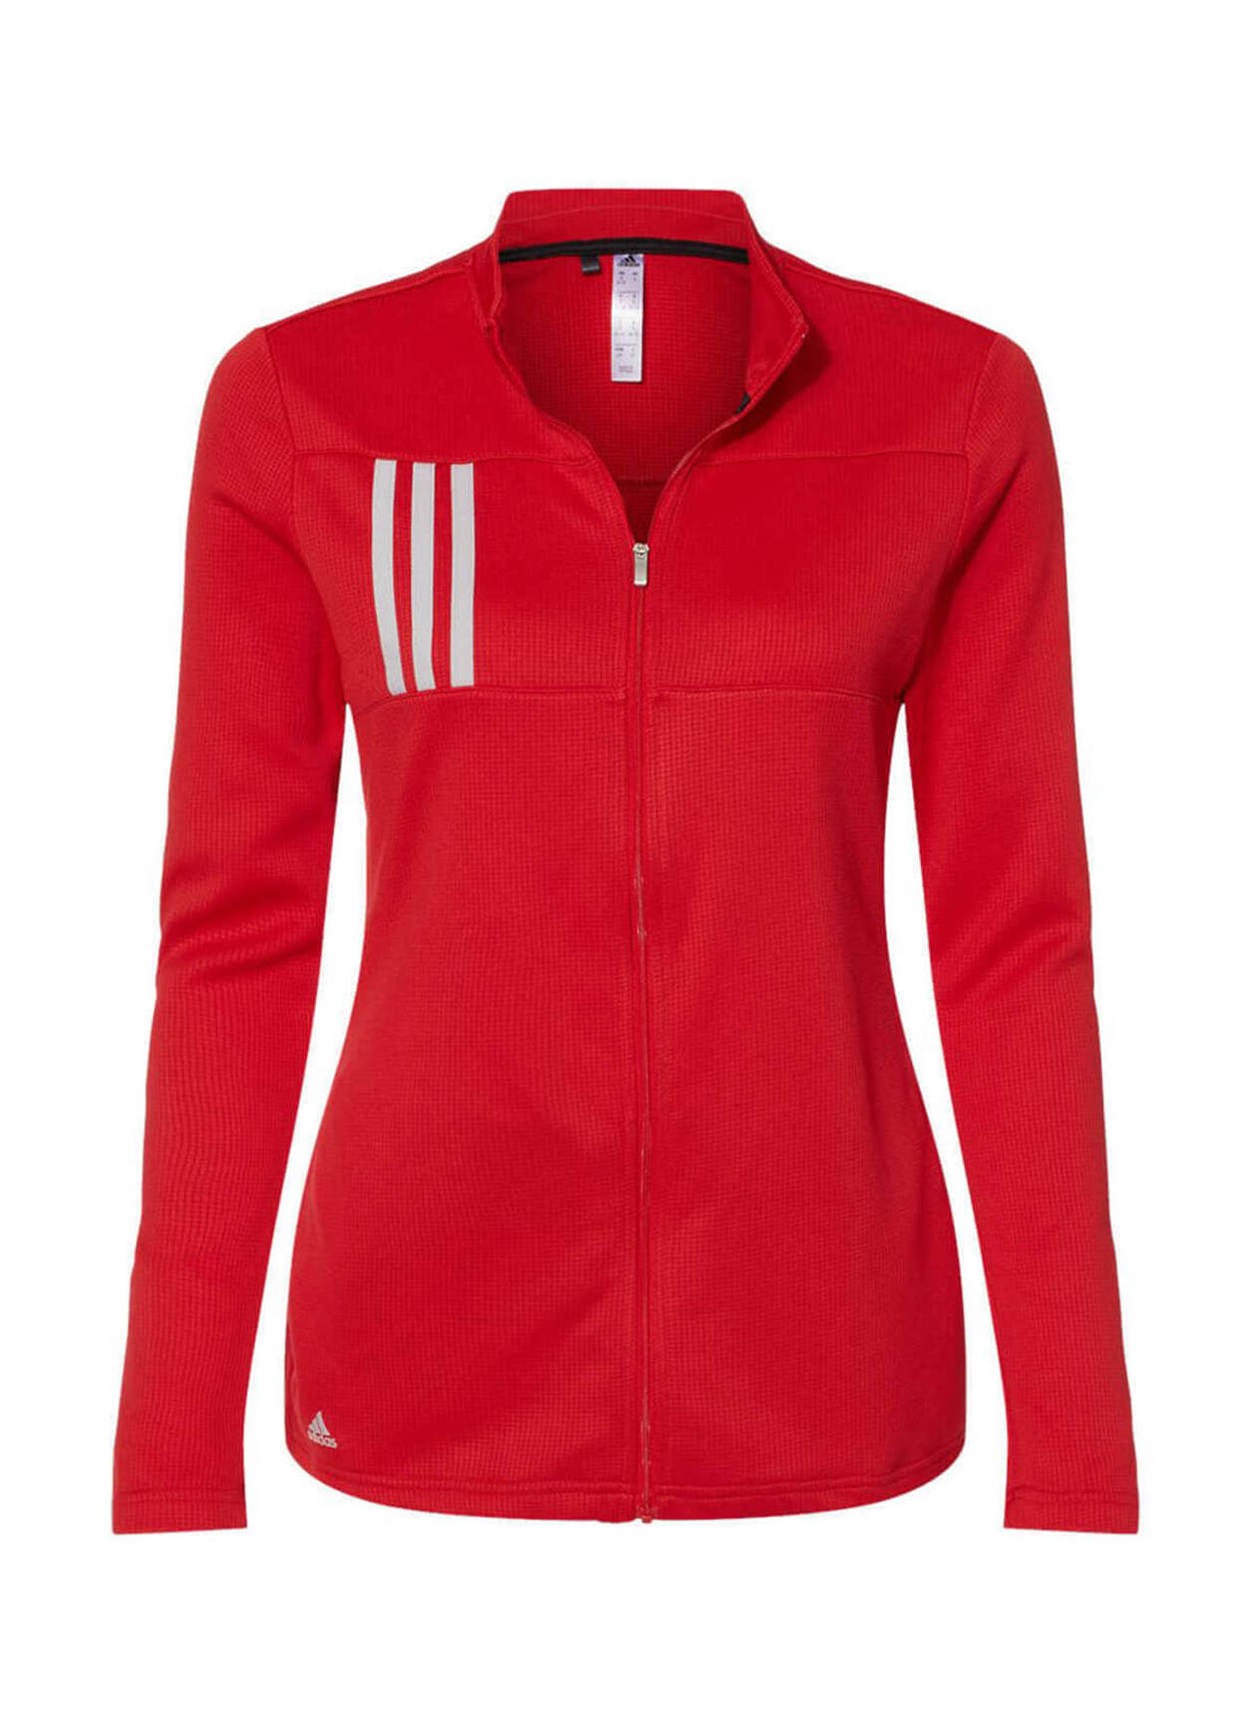 Women's Team Collegiate Red / Grey Two Adidas 3-Stripes Double Knit Full-Zip Sweatshirt